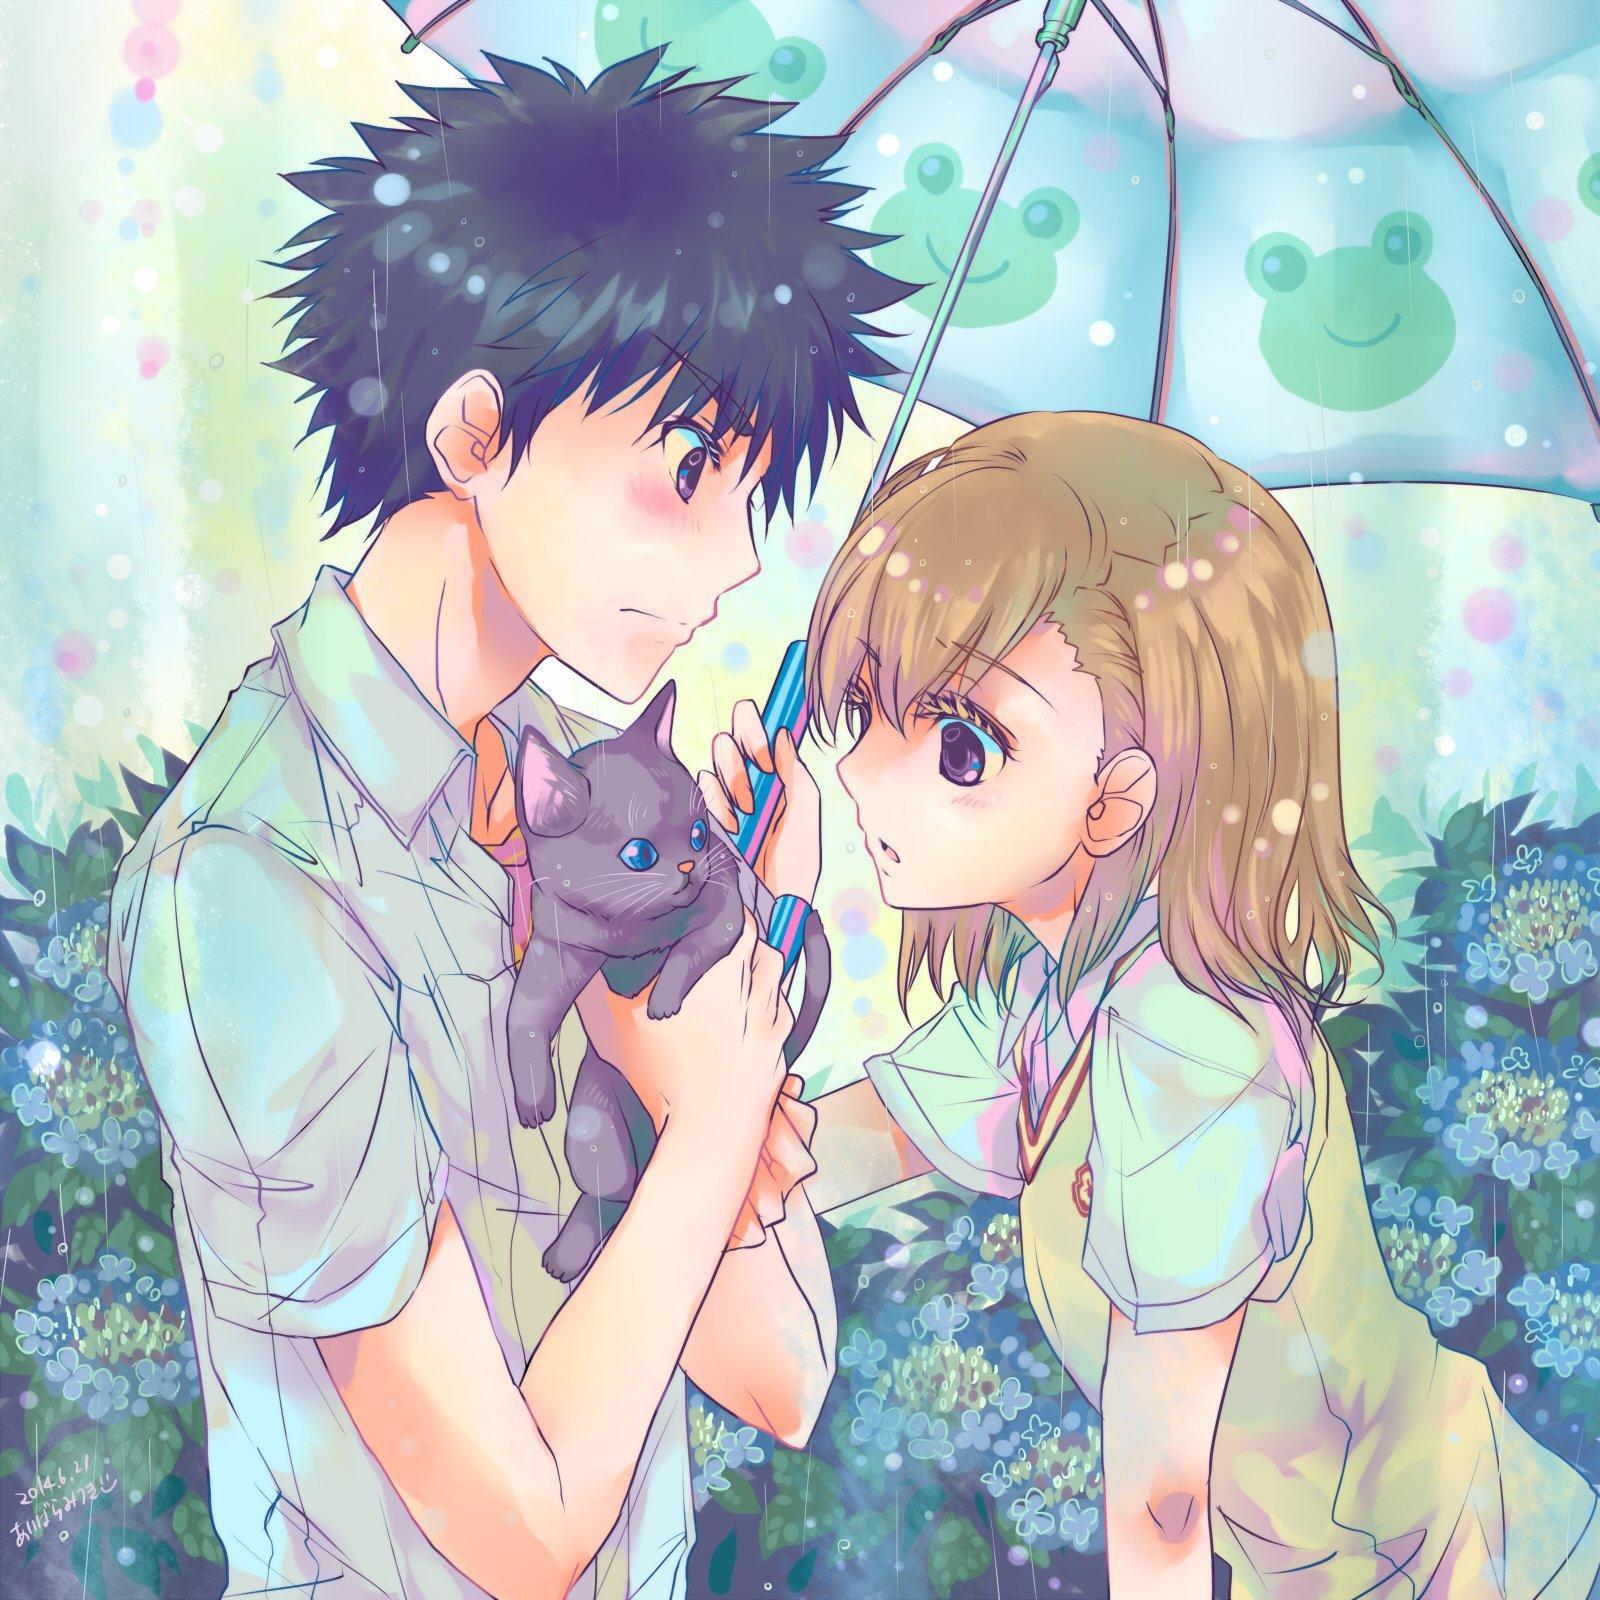 umbrella, Anime, Couple, Cat, Cute, Girl, Boy, Rain, Love